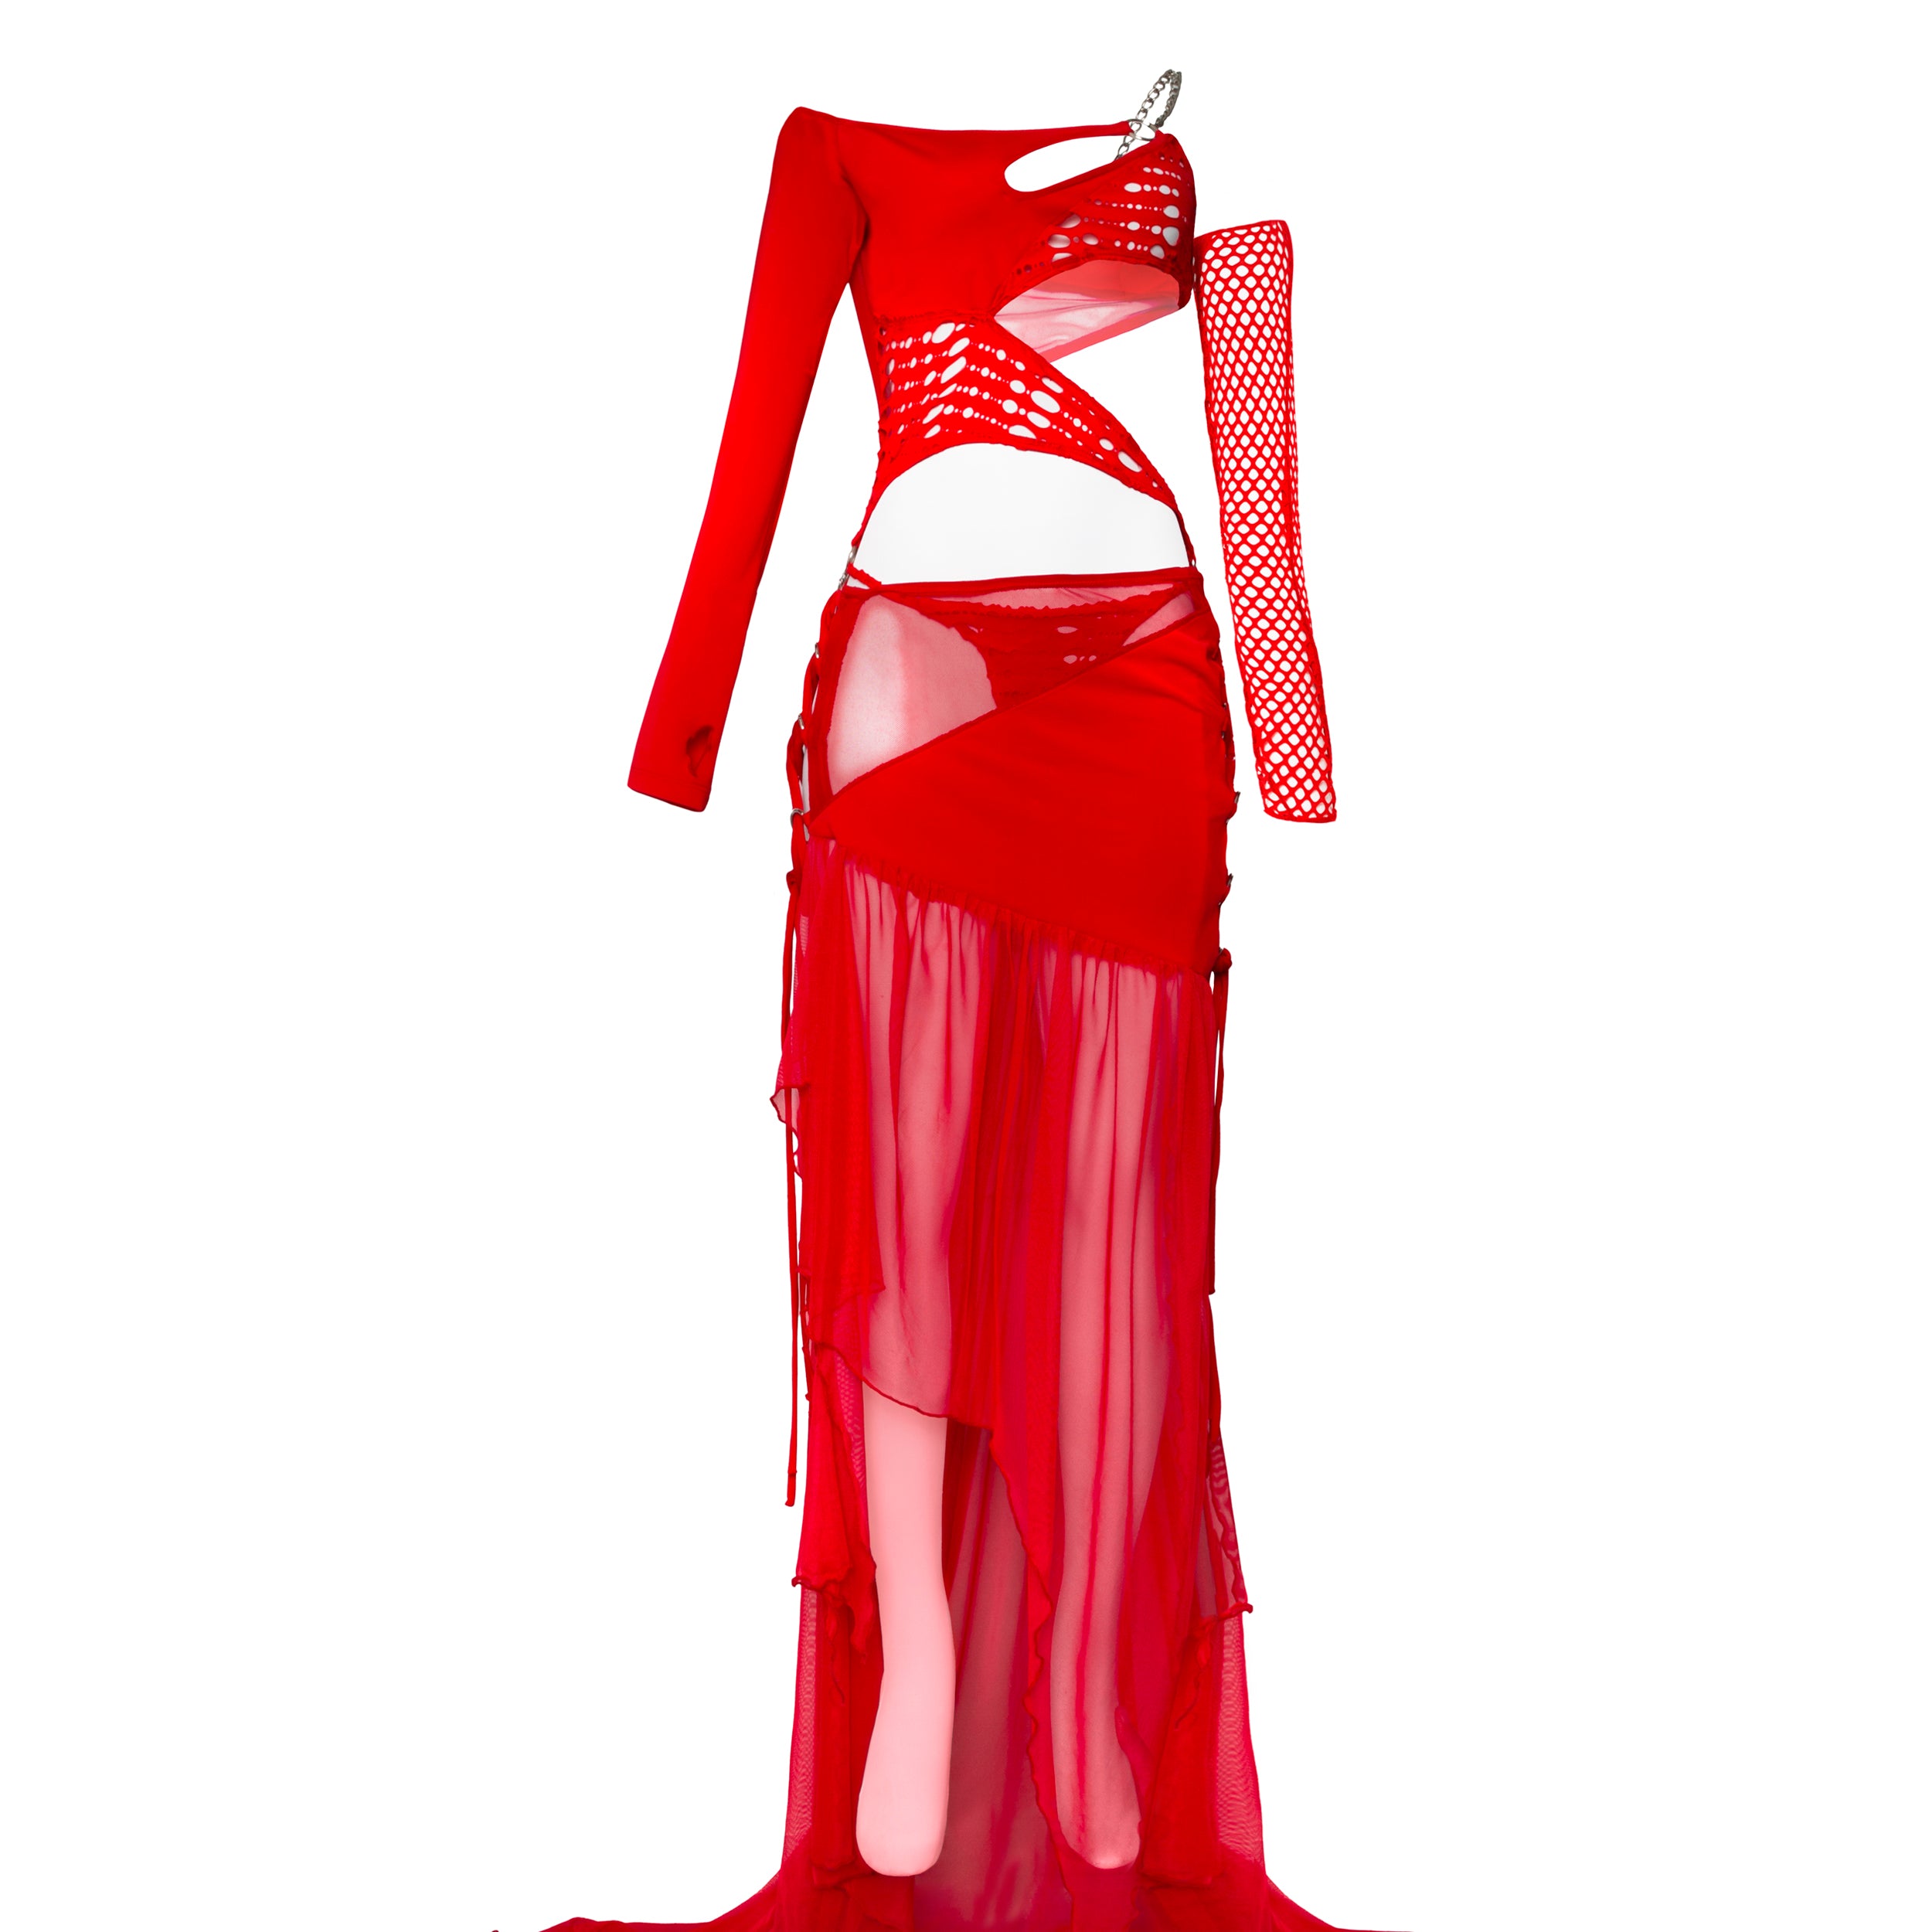 SAMPLE Red Dress